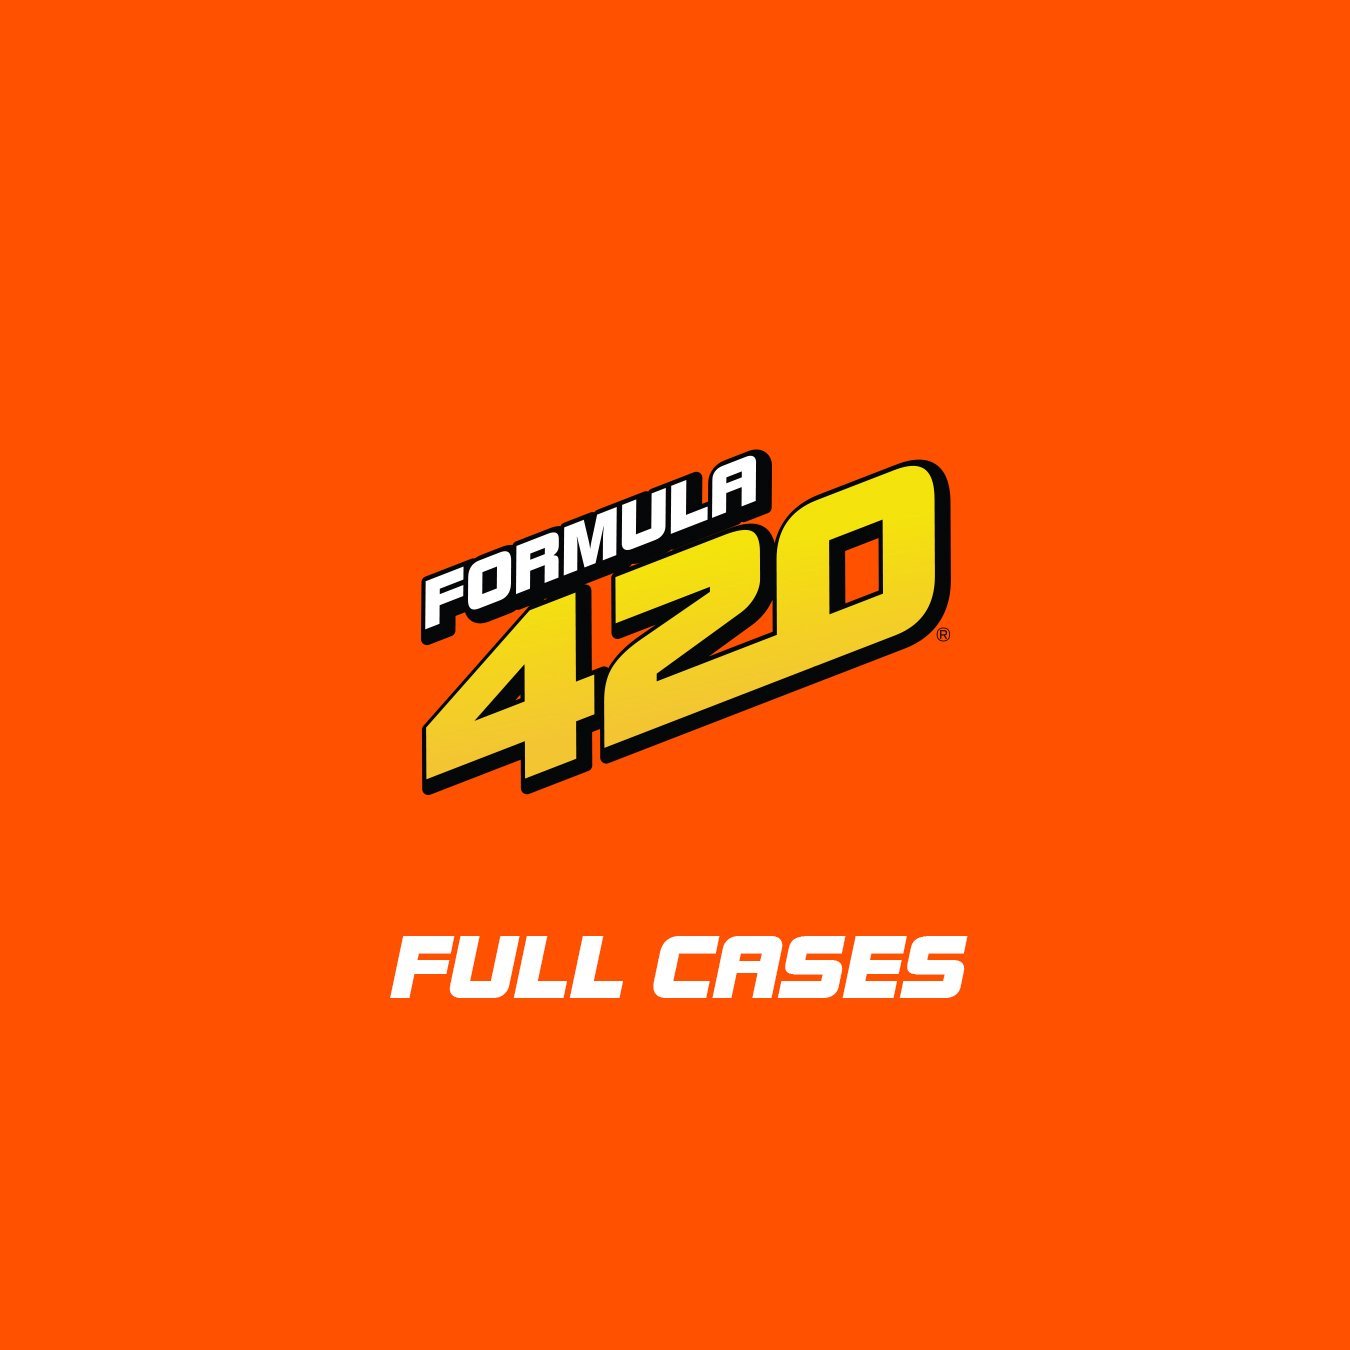 A1 - Formula 420 Original Cleaner